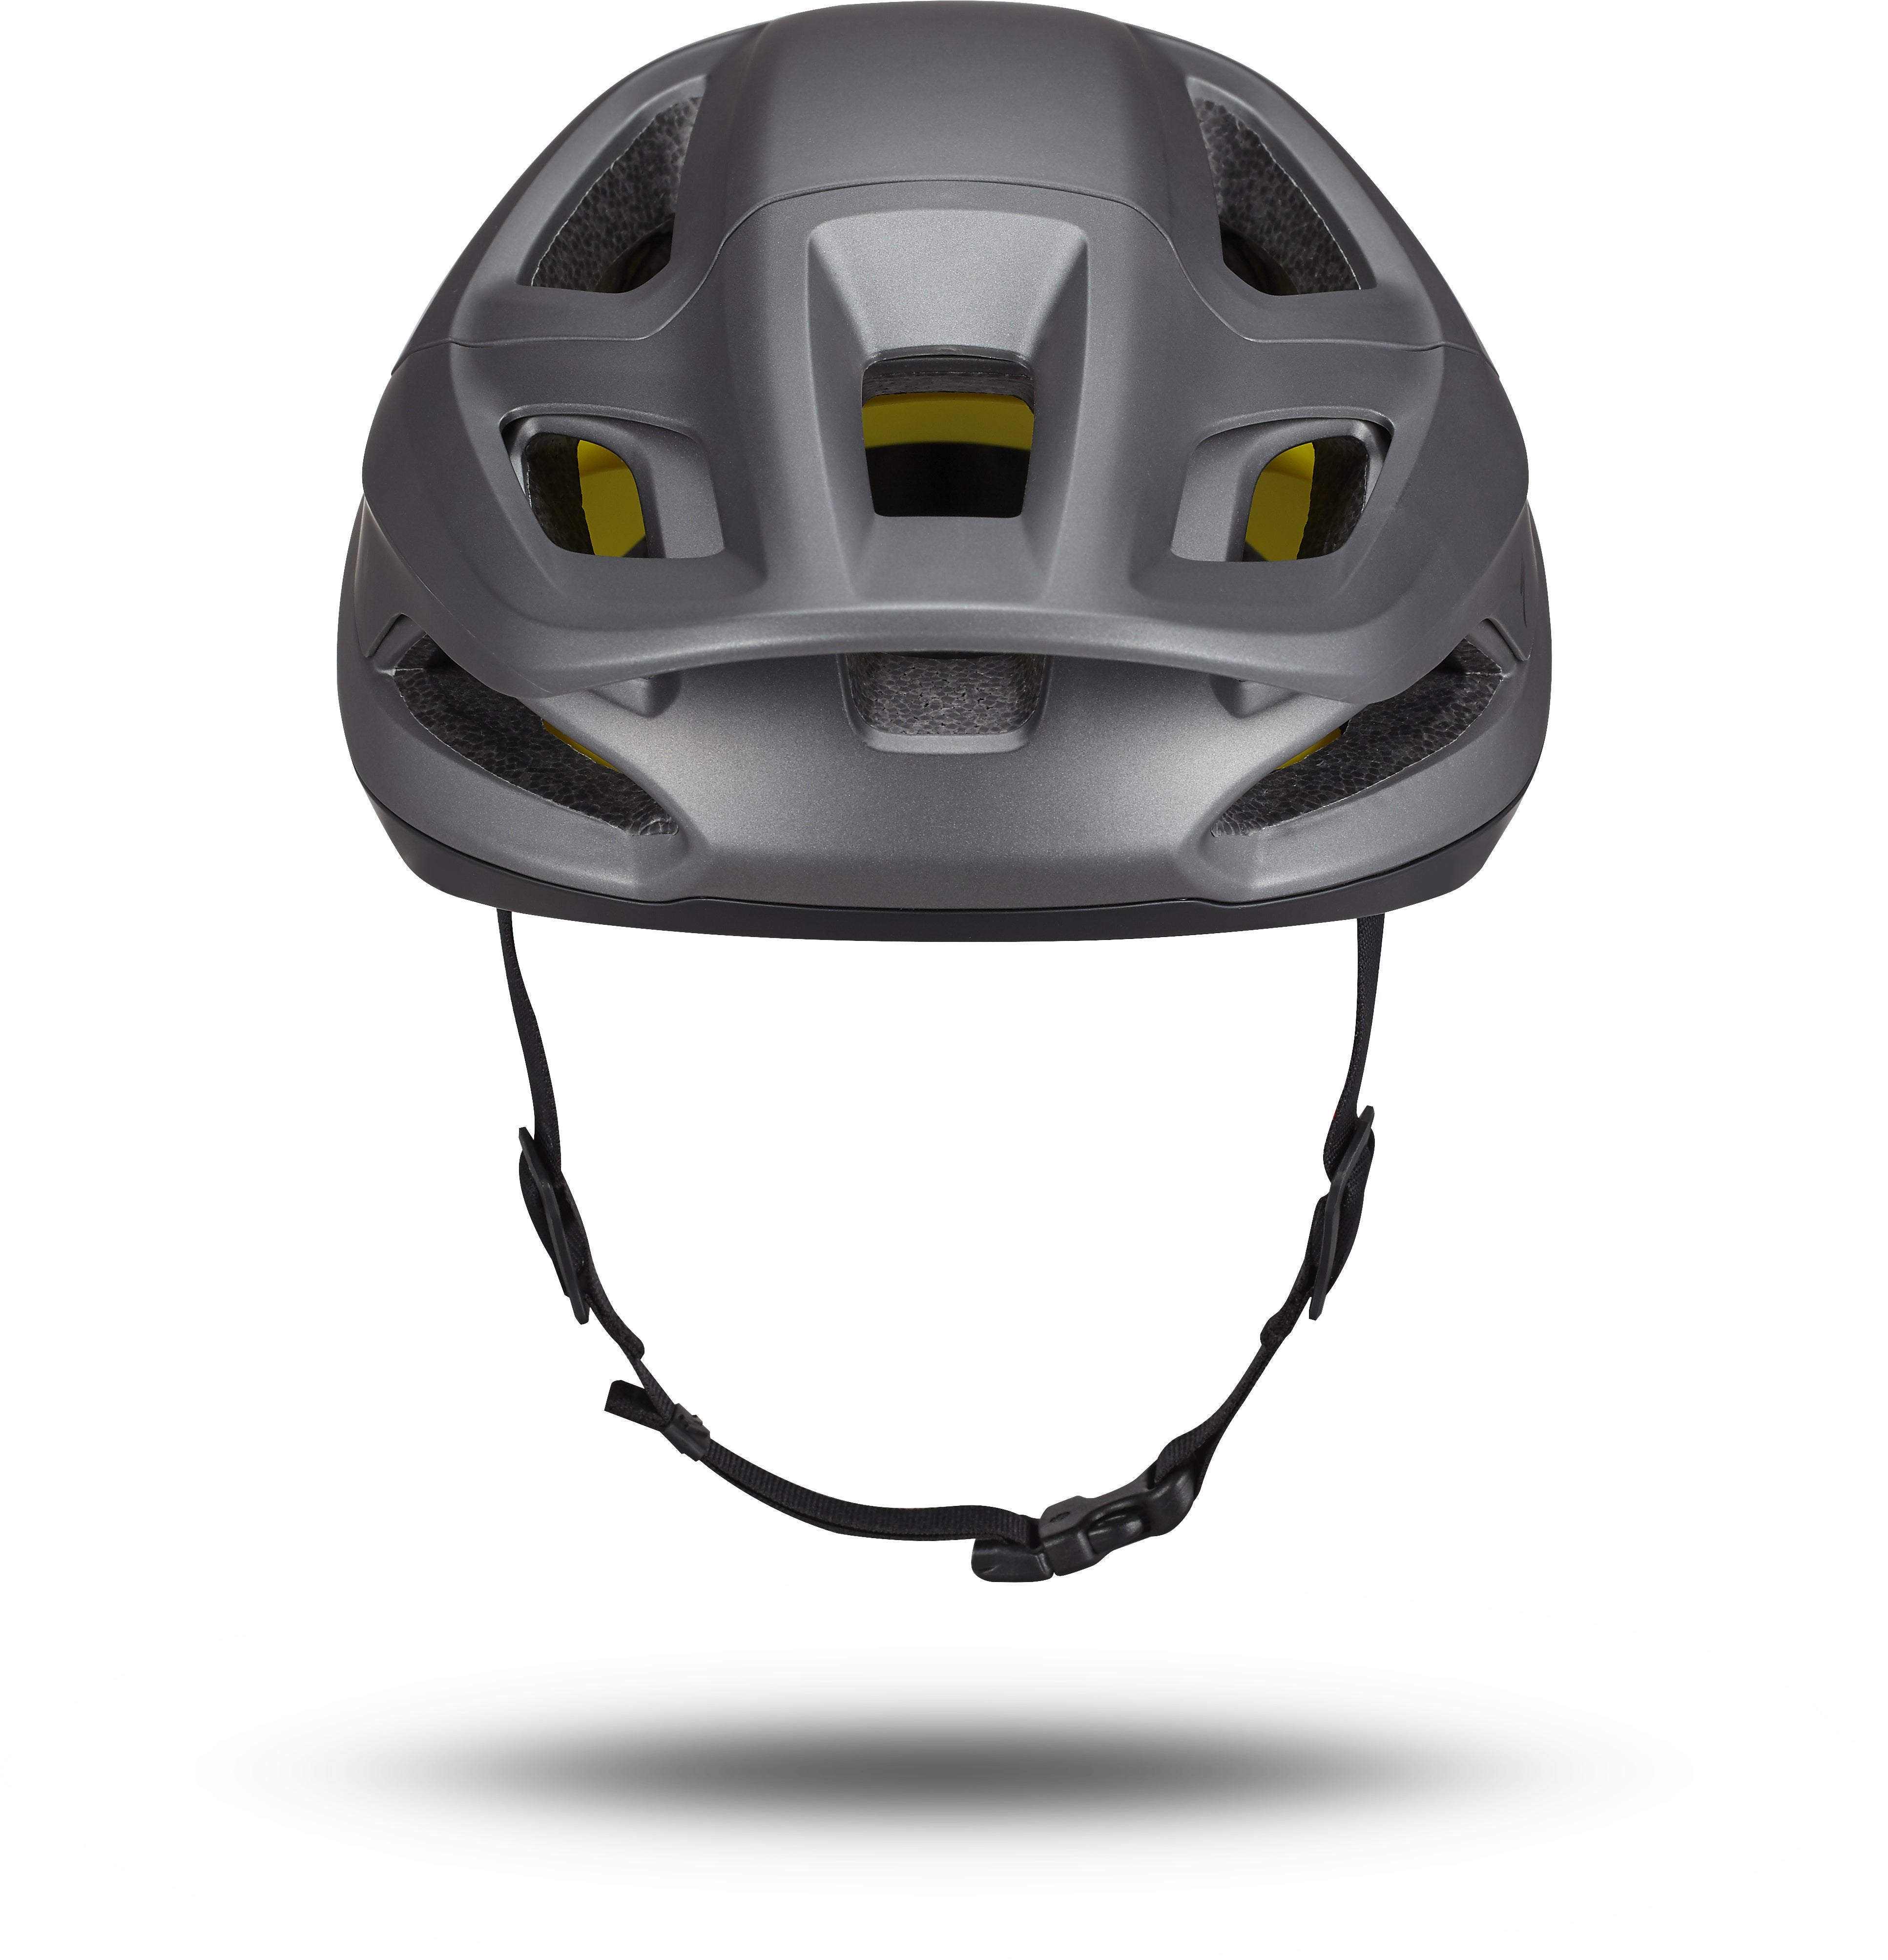 Camber Bike helmet in Black - Smoke color front view